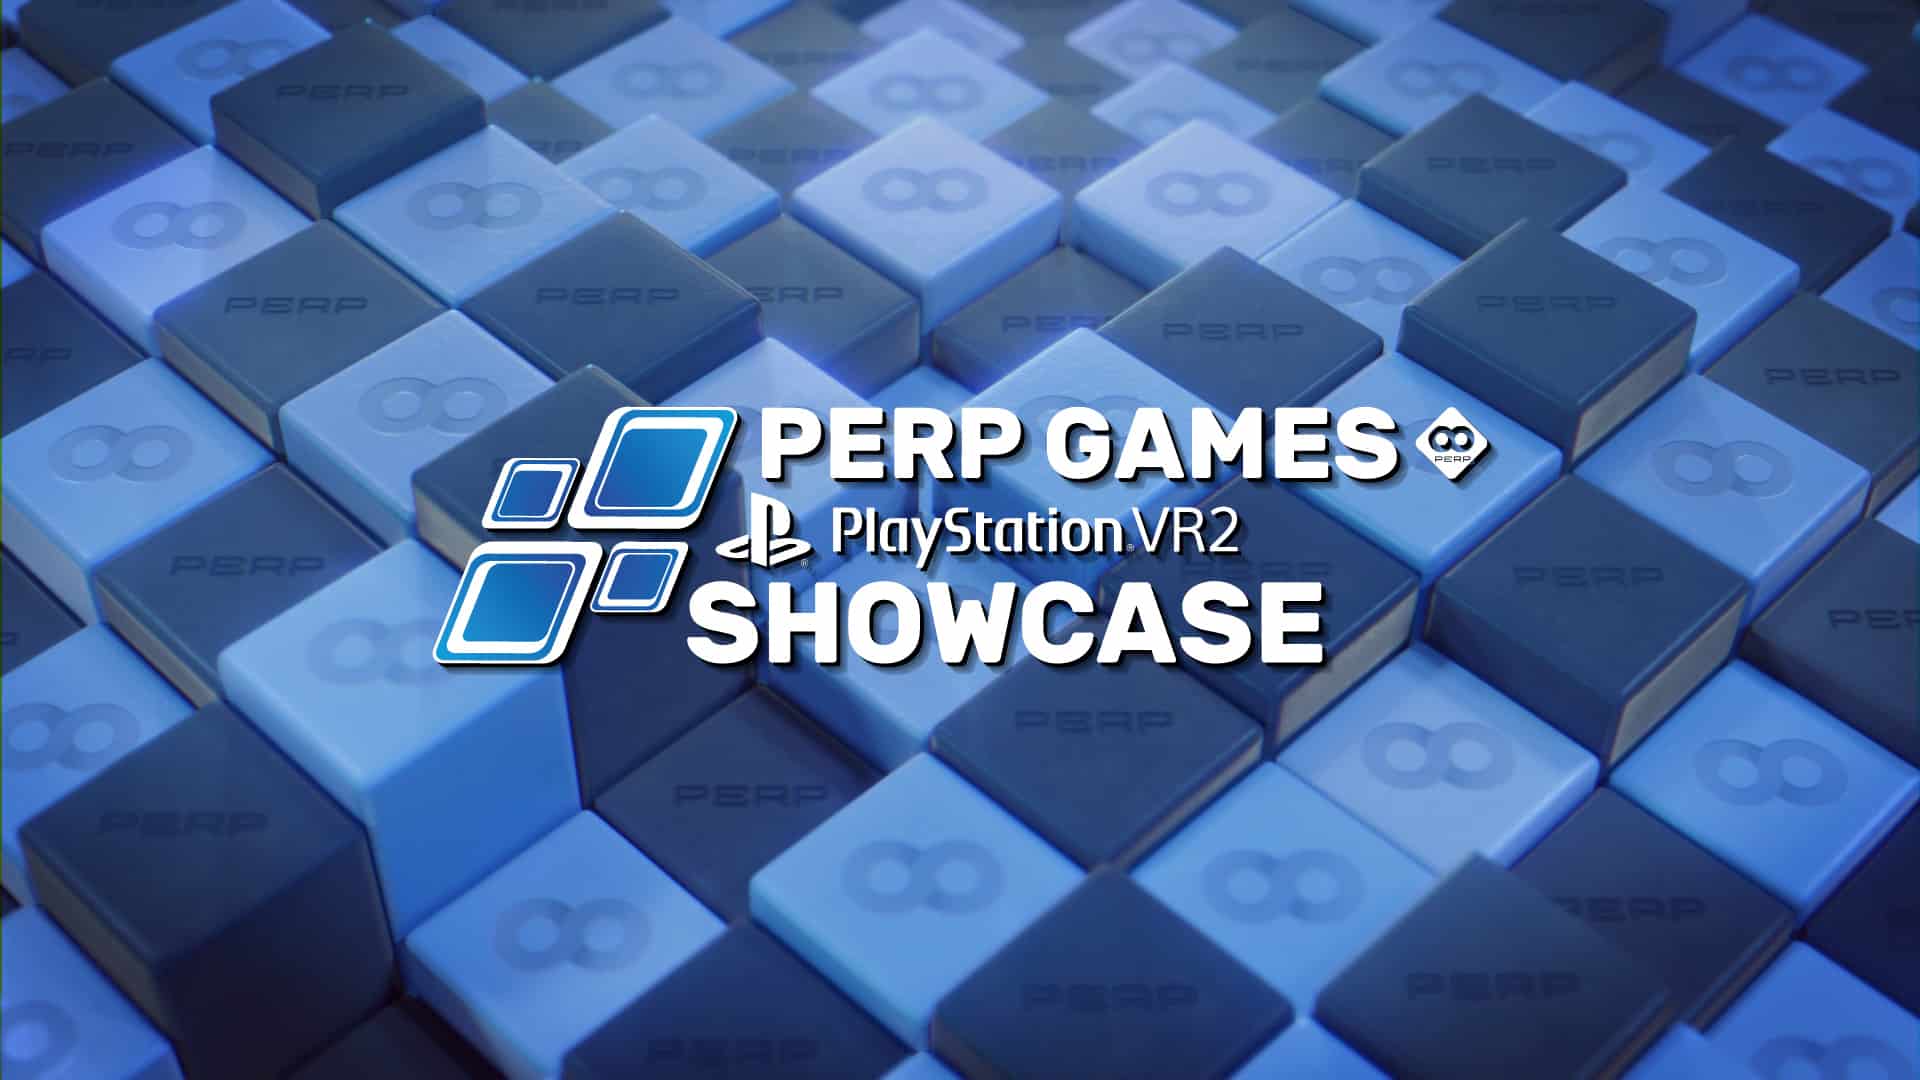 Perp Games, 다음 주에 PSVR 2 쇼케이스 발표, 새로운 공개 약속